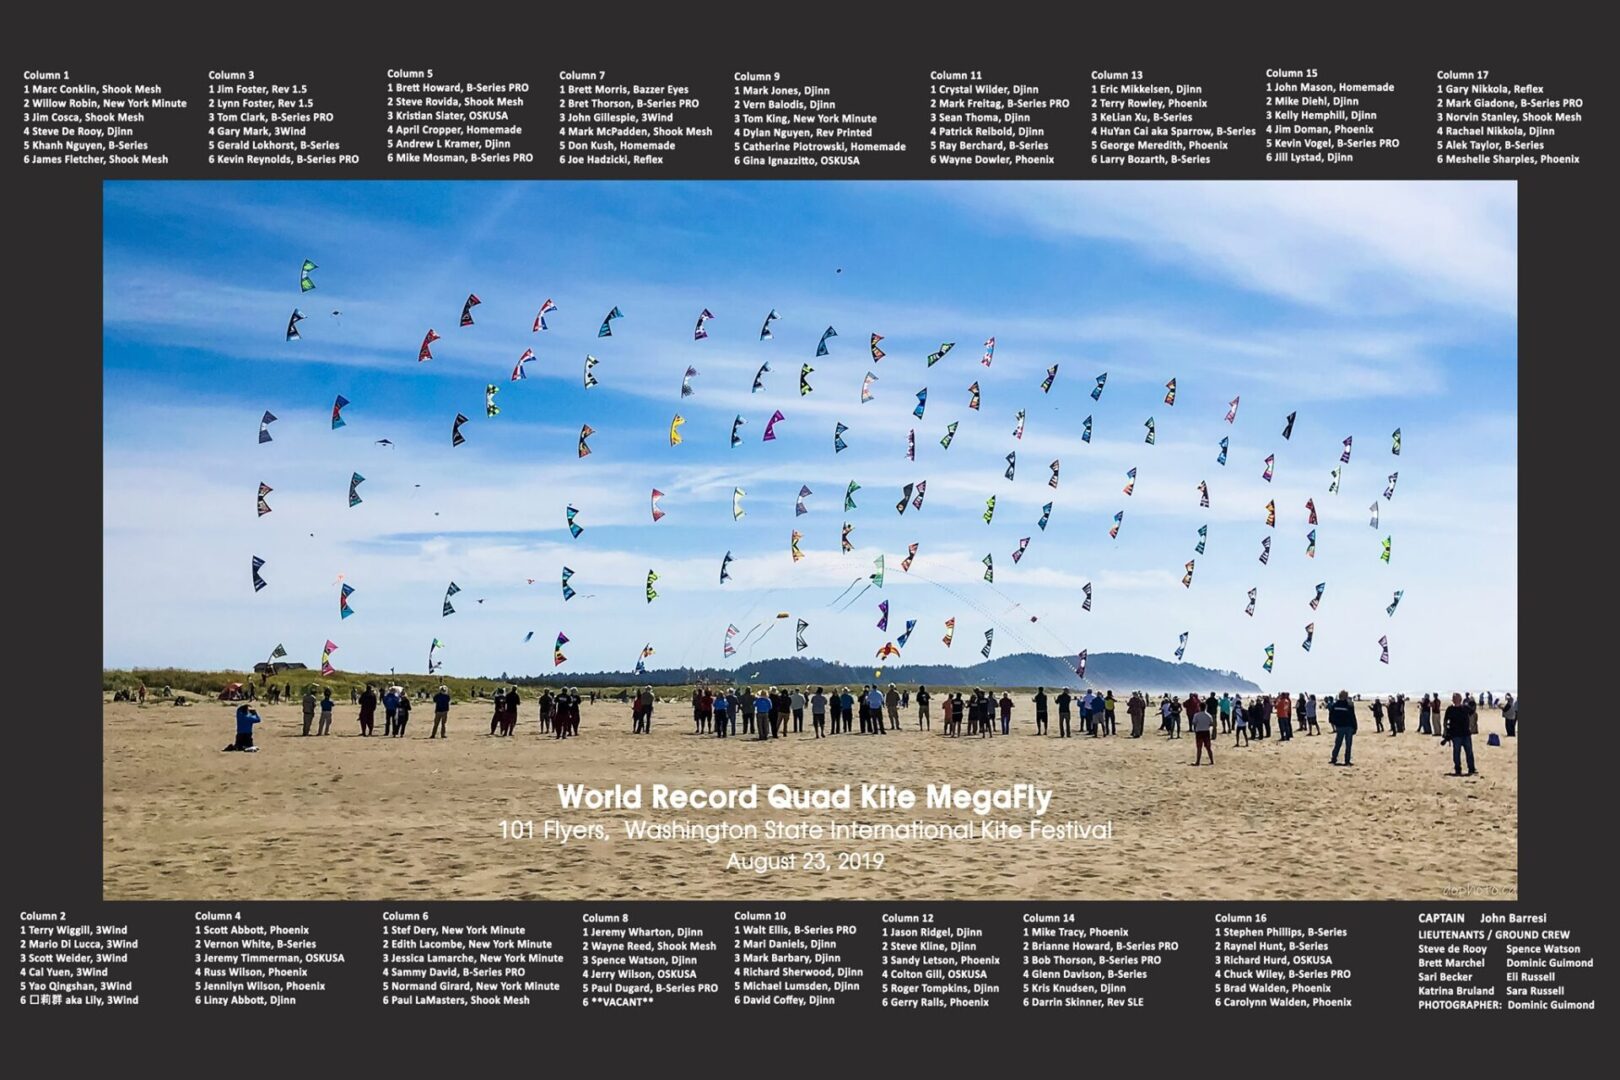 World Record Quad Kite MegaFly event poster